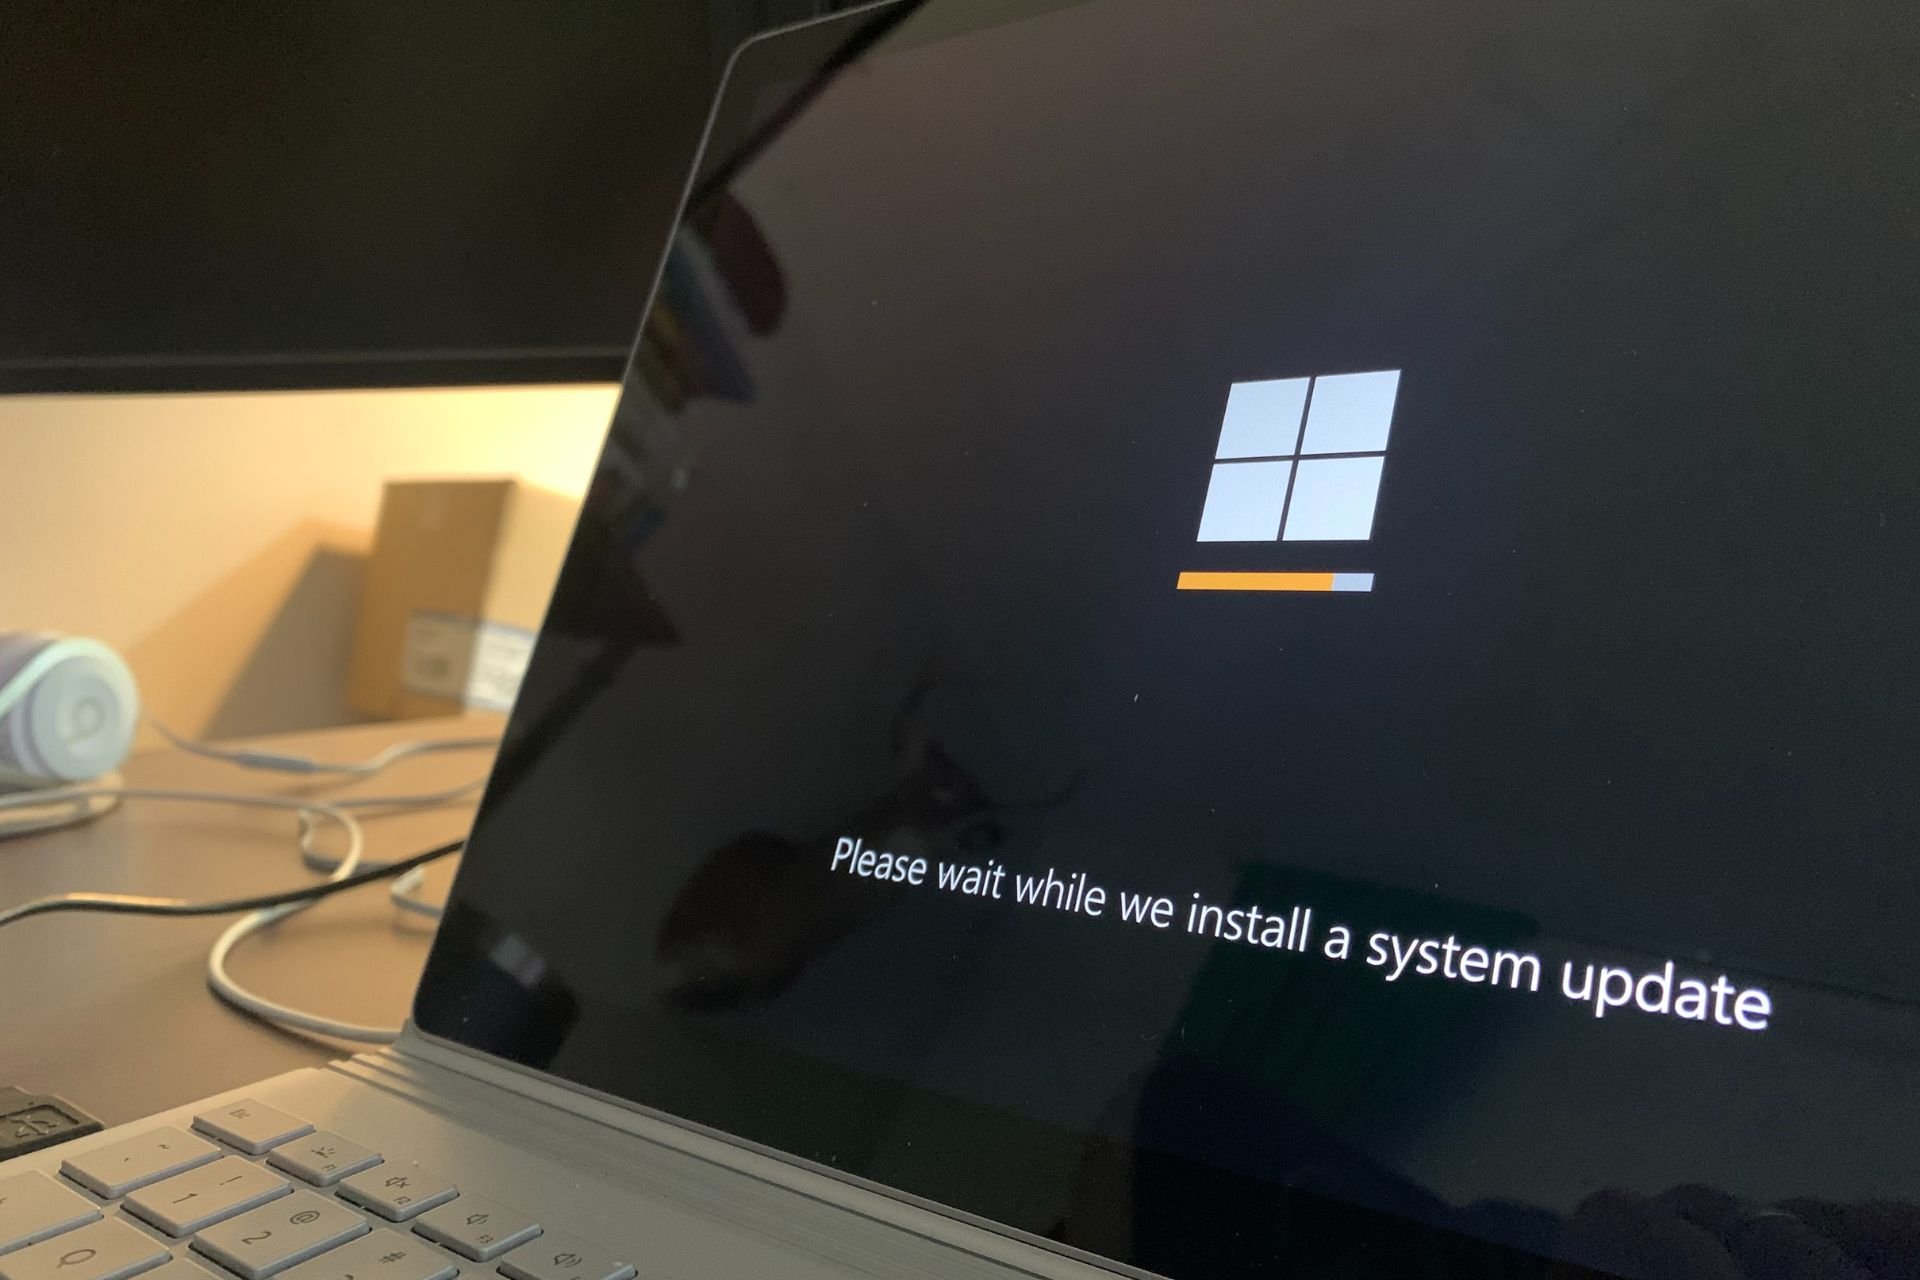 install windows updates faster